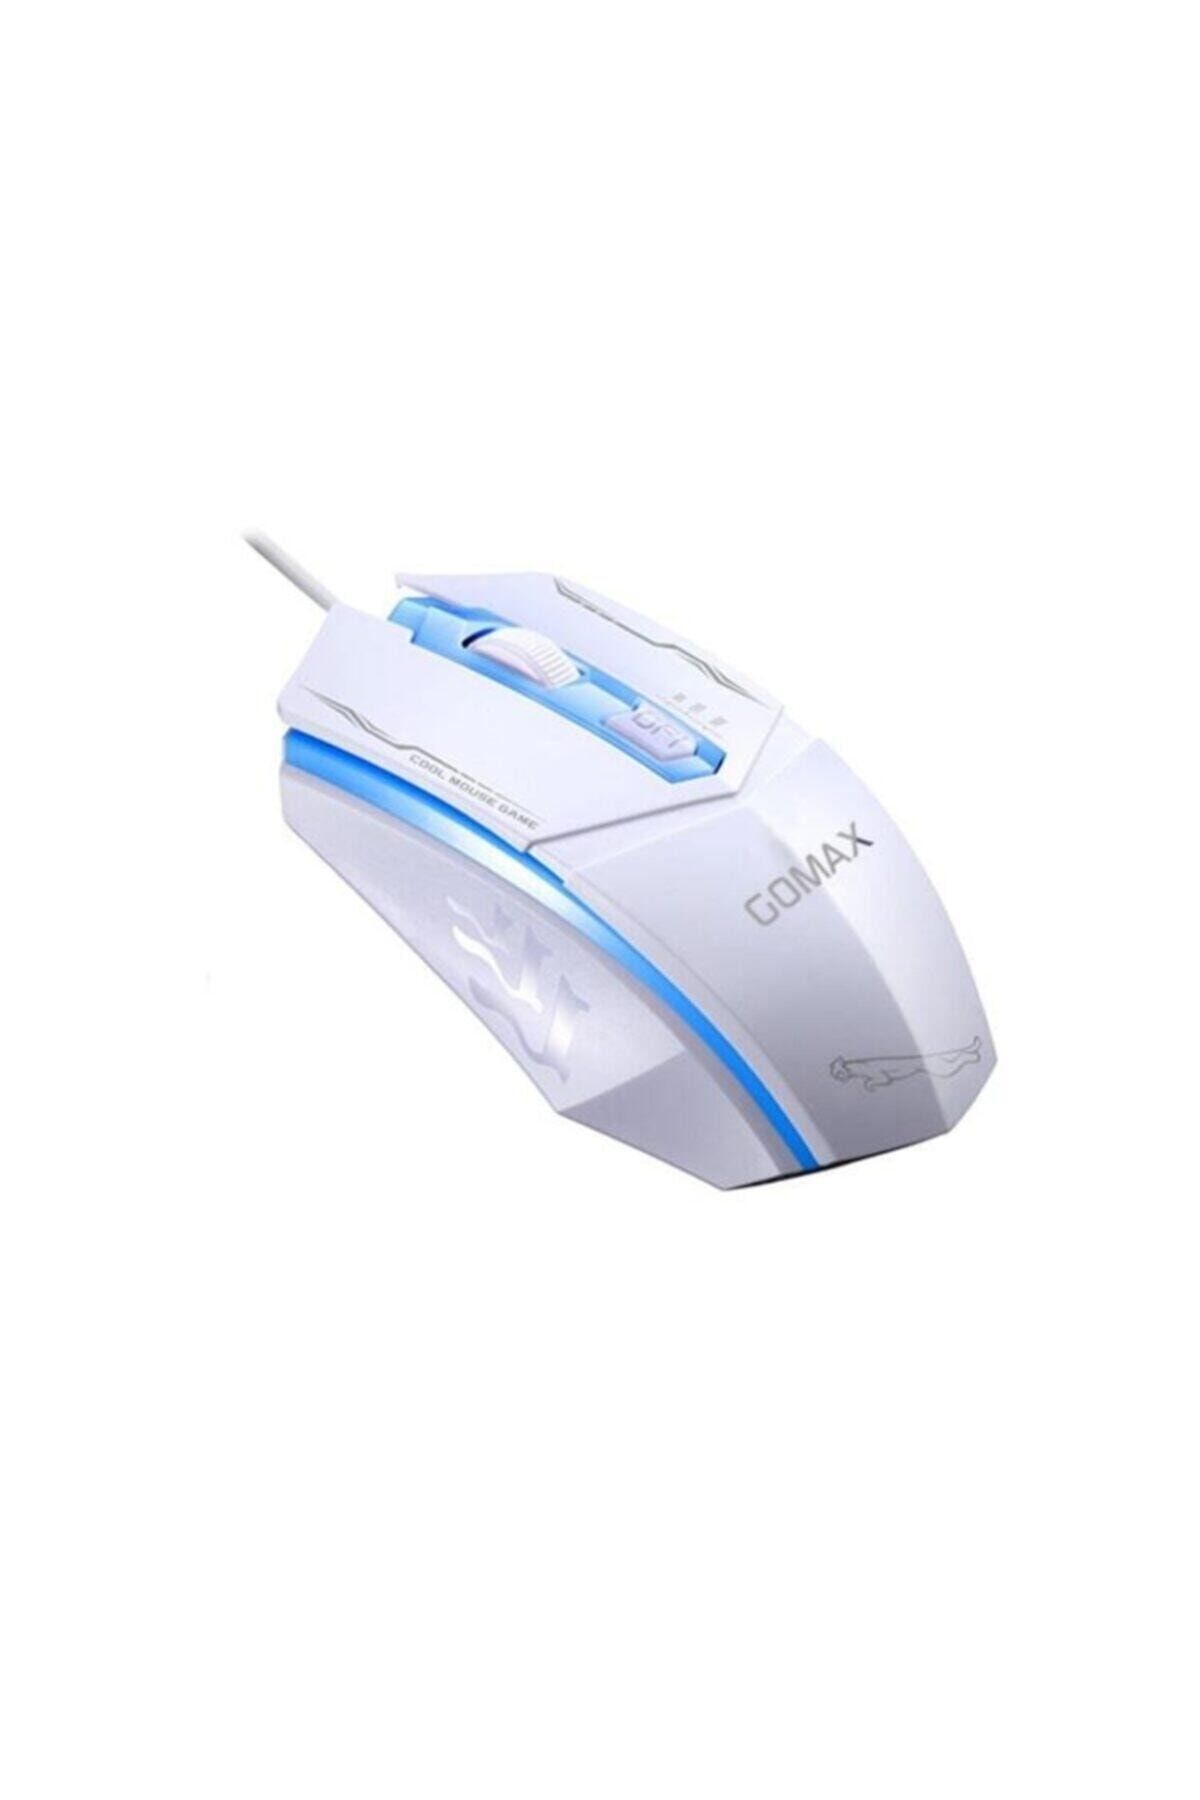 Gomax Oyuncu Mouse M1 Gaming Rgb Işıklı Oyuncu Fare Beyaz